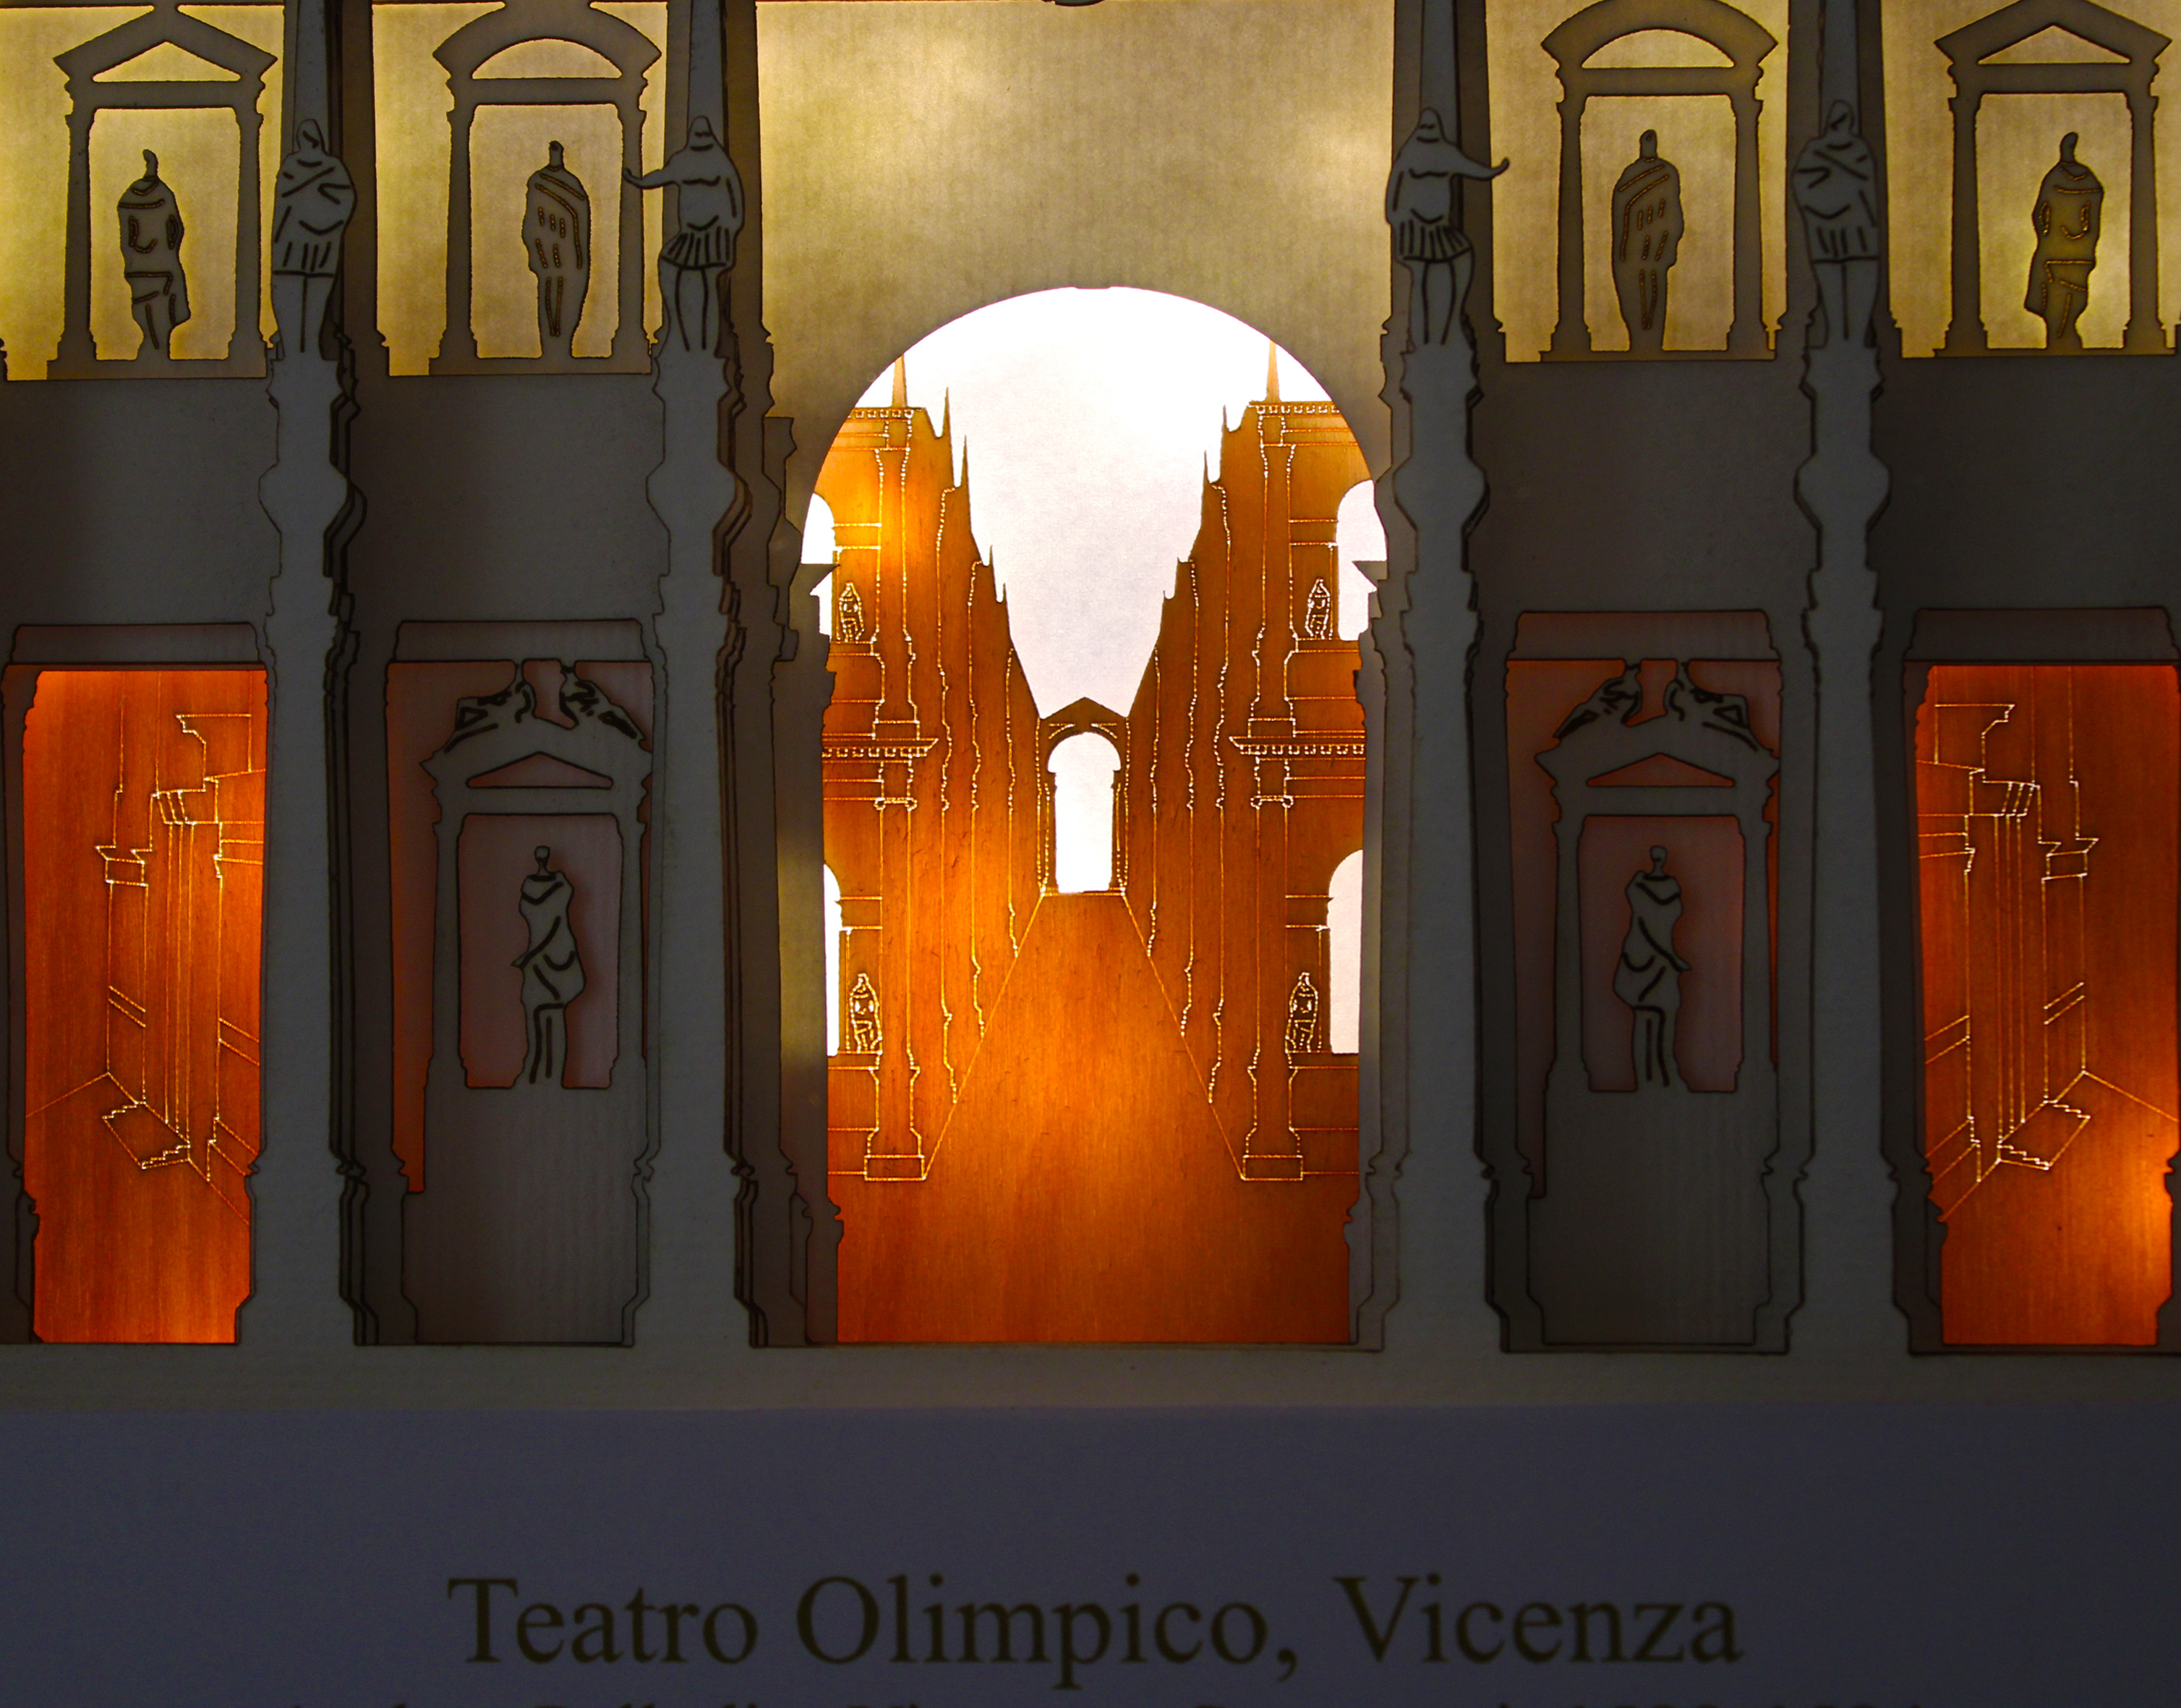 Light box, Cornice luminosa, luci LED, Teatro Olimpico, Vicenza, Palladio, Scamozzi, Rinascimento, Lampada Architettura Italiana-4